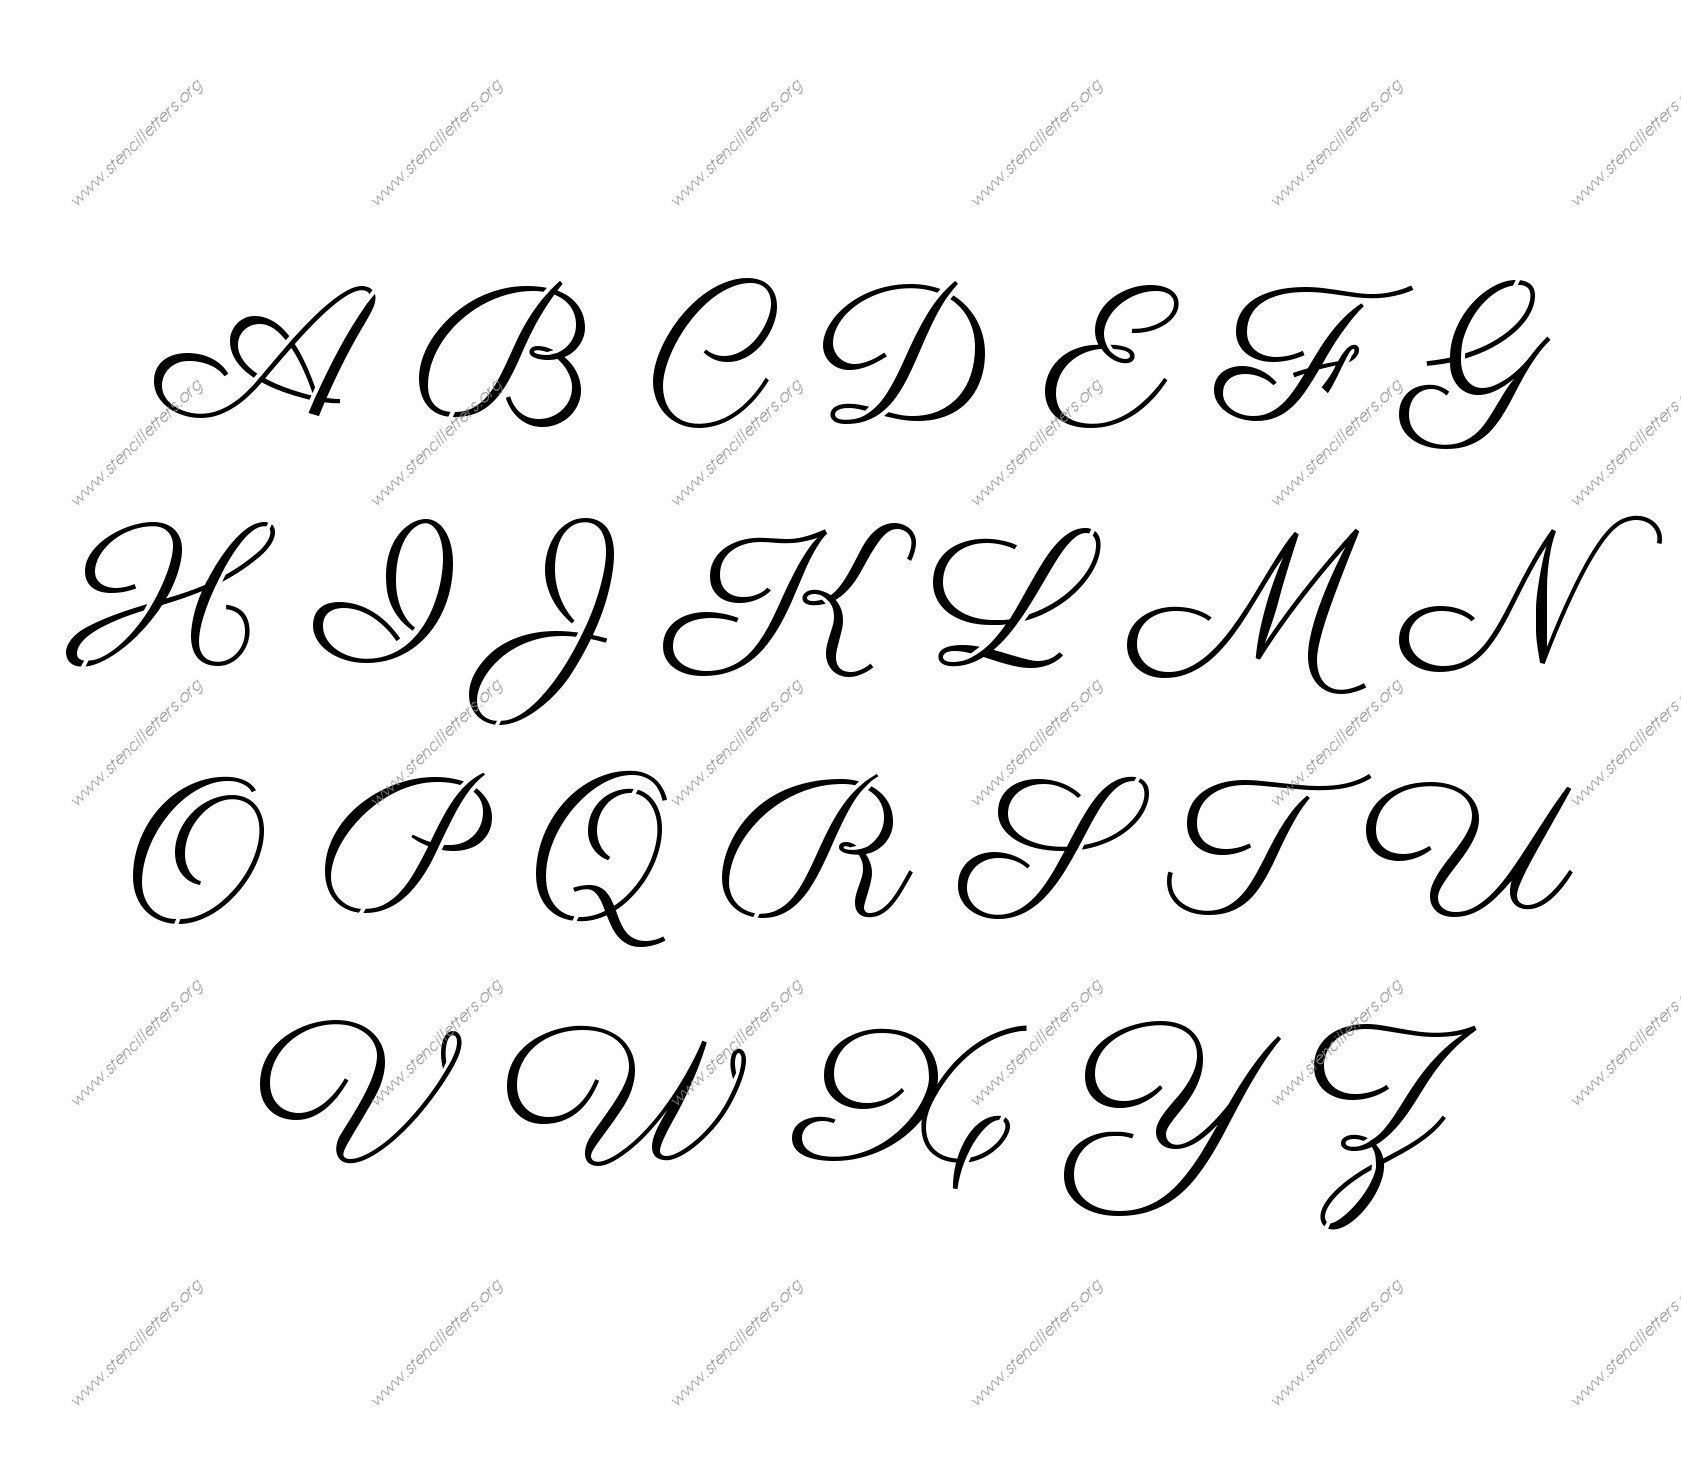 Free Printable Letter Stencils 2 - Crearphpnuke - Free Printable Calligraphy Letter Stencils